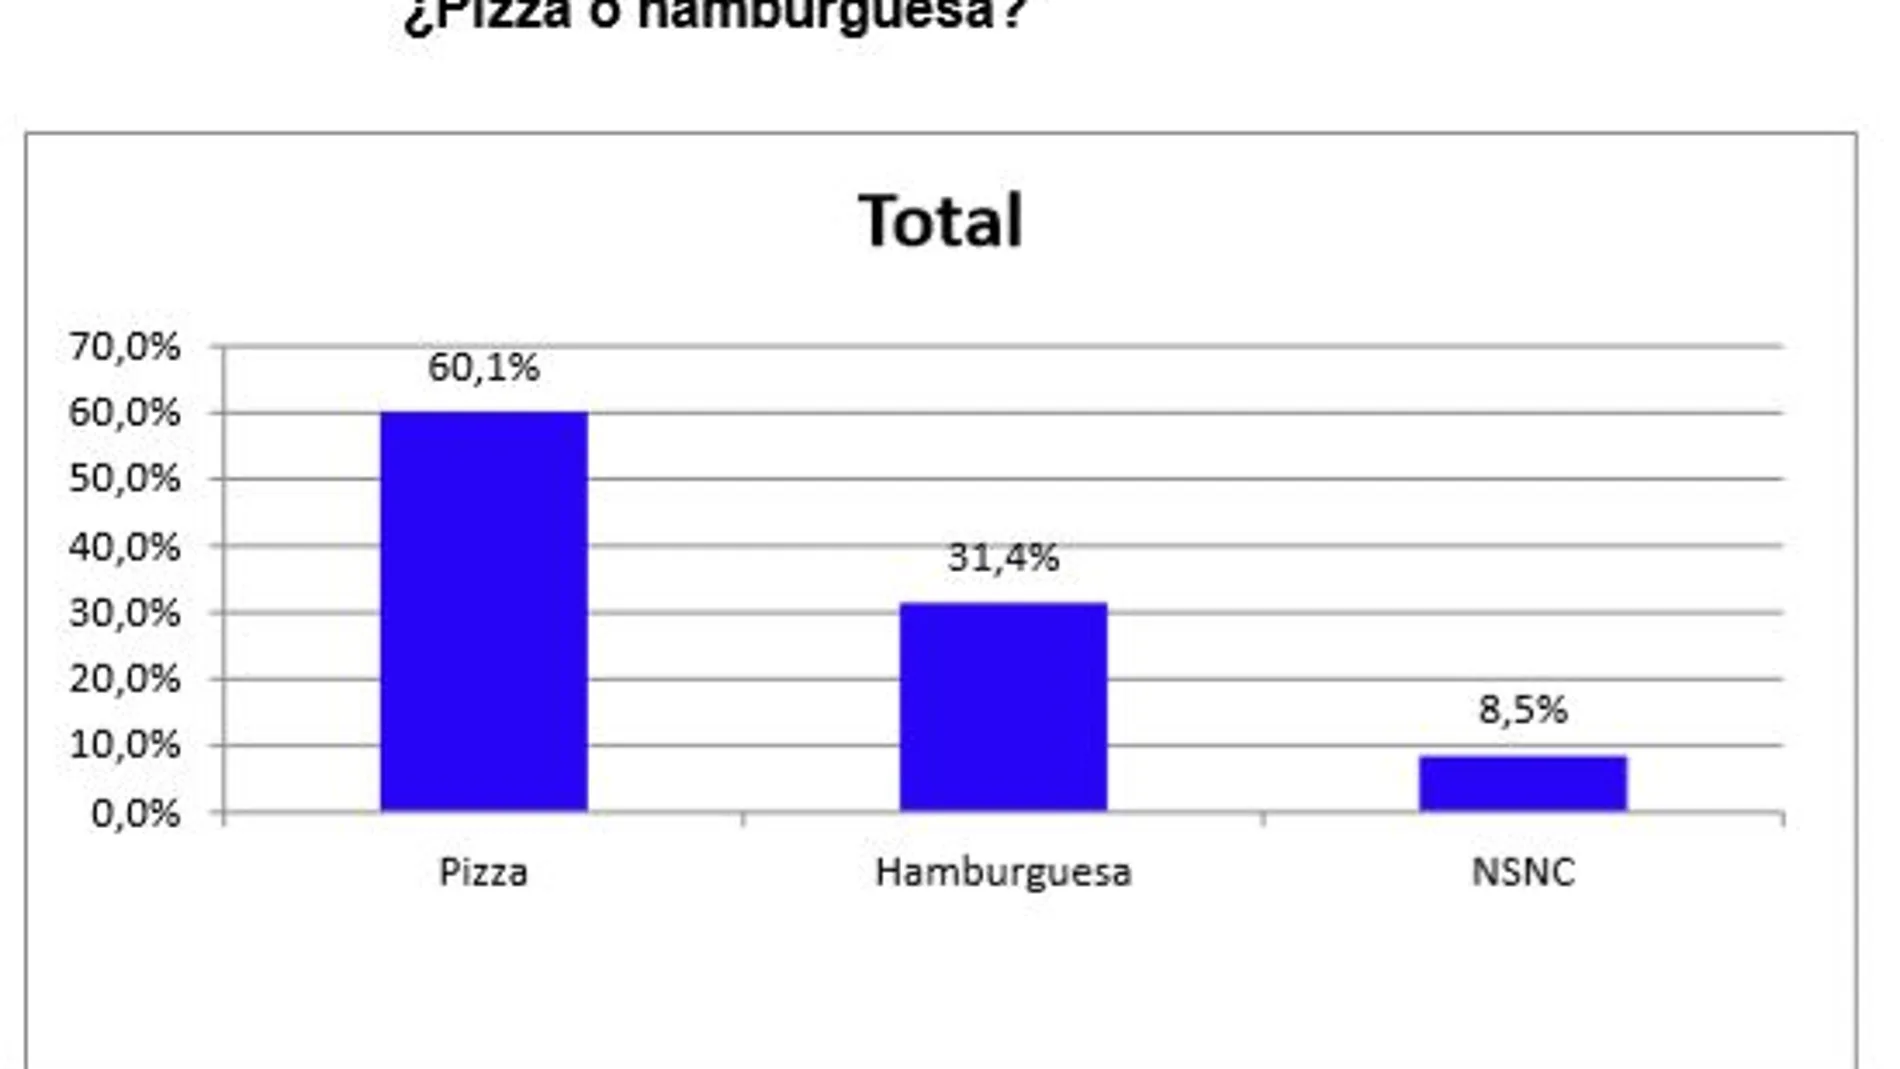 ¿Prefiere la pizza o la hamburguesa?